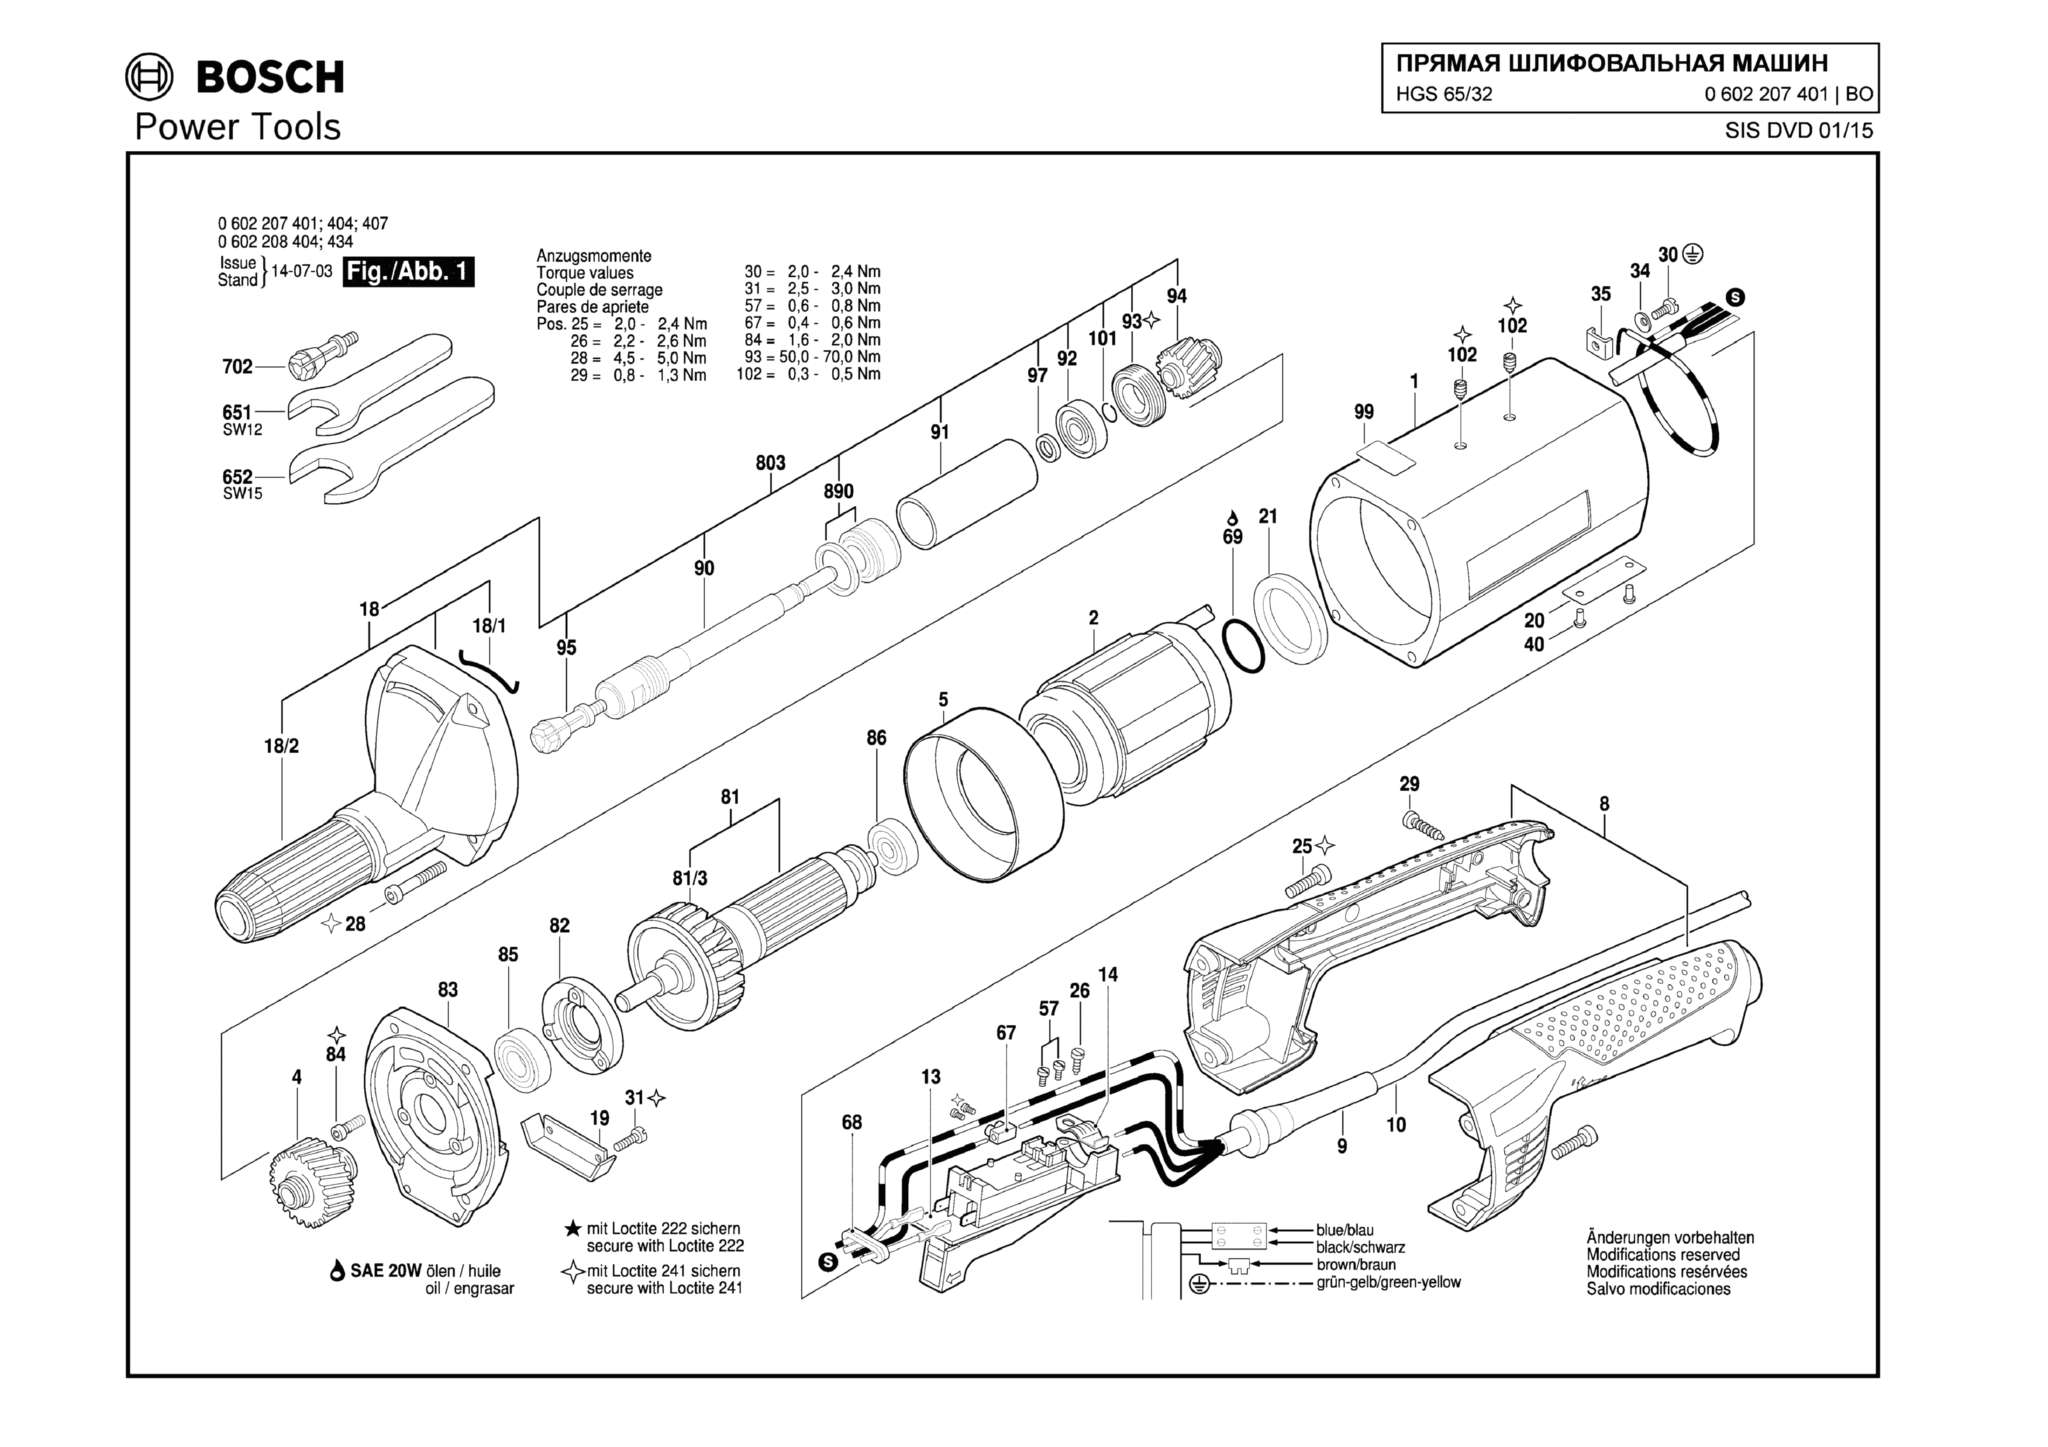 Запчасти, схема и деталировка Bosch HGS 65/32 (ТИП 0602207401)